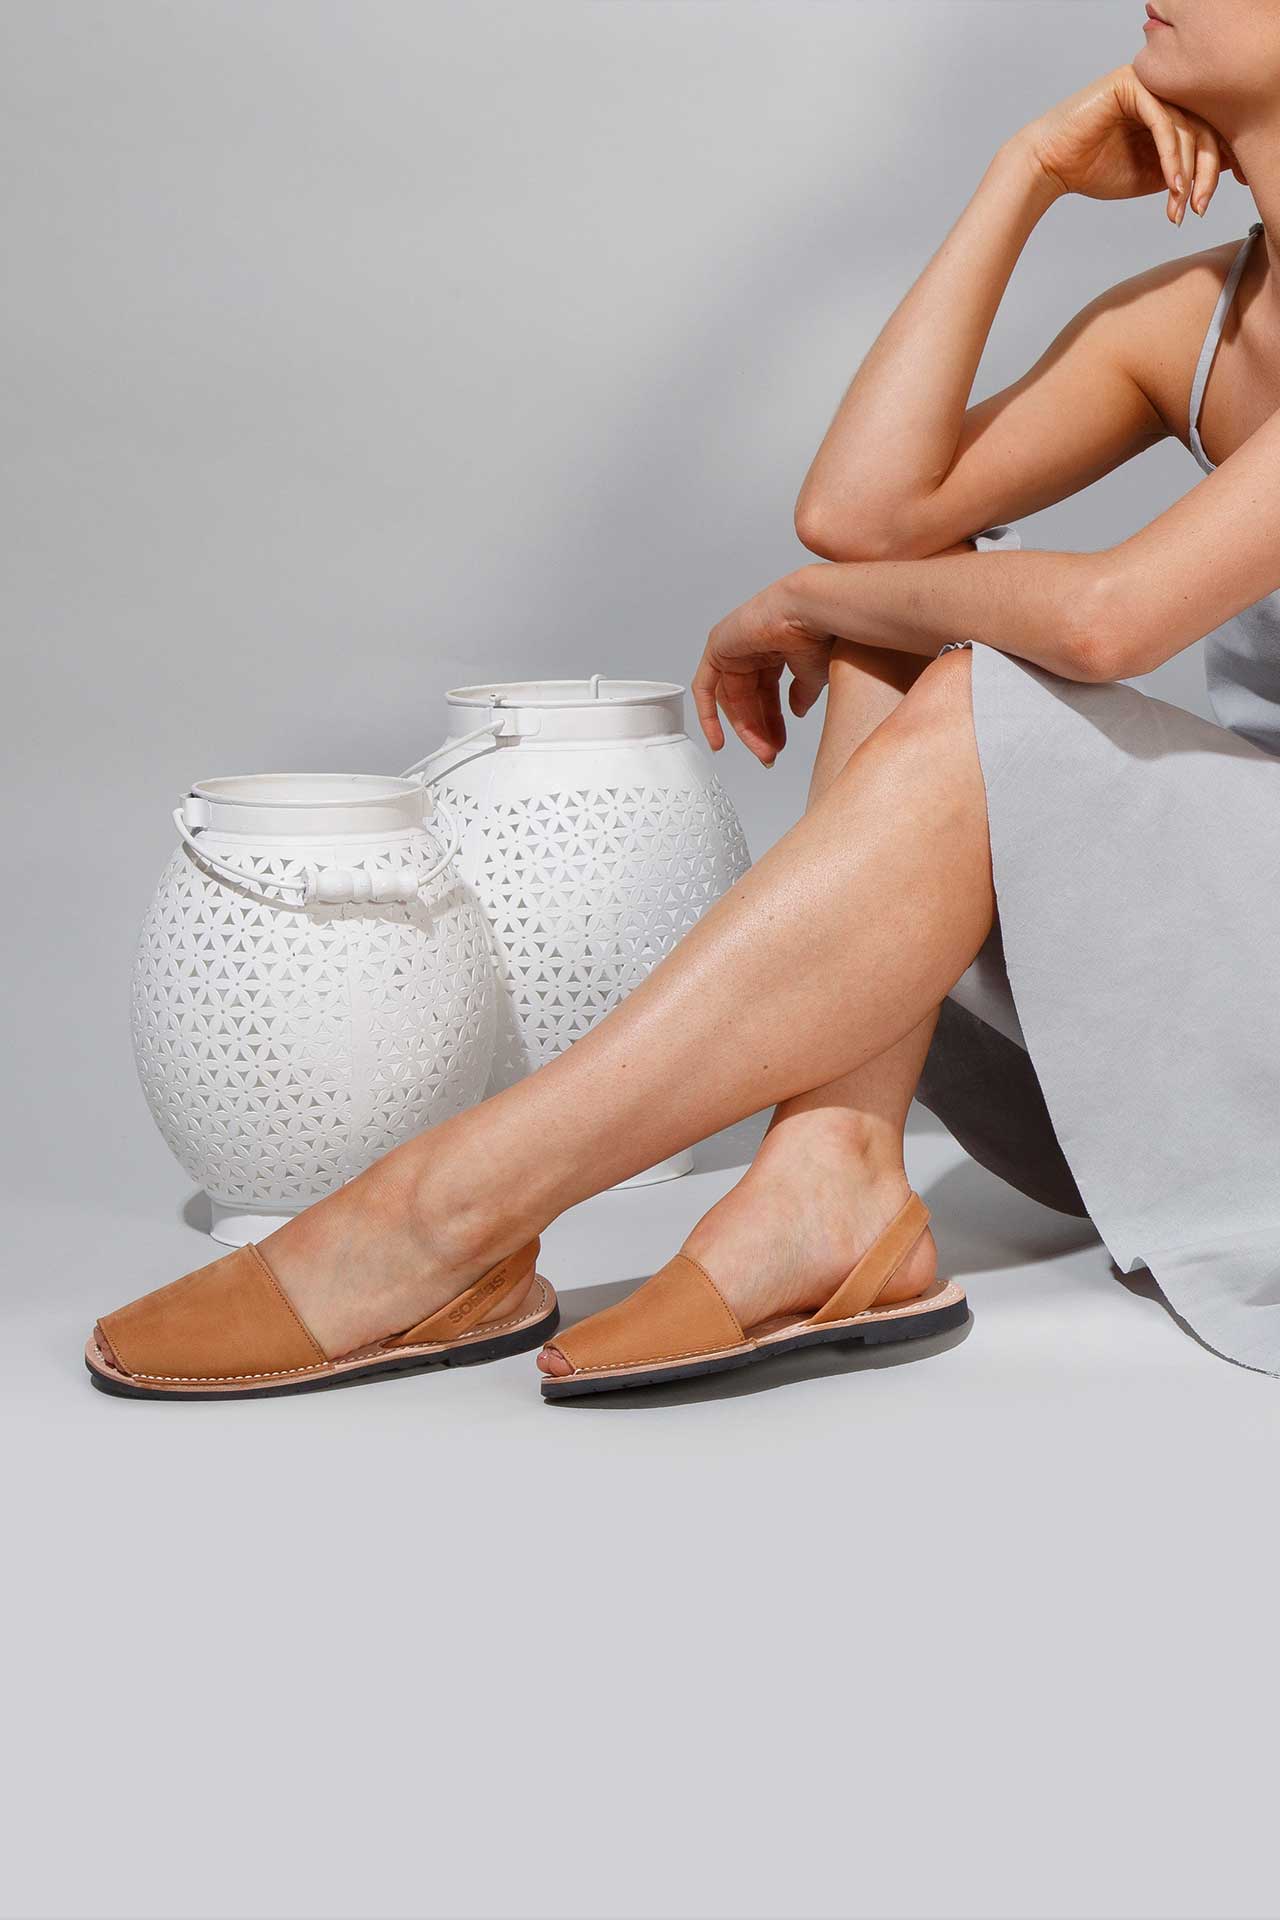 Cuero - Original Menorcan Sandals in Tan Nubuck Leather